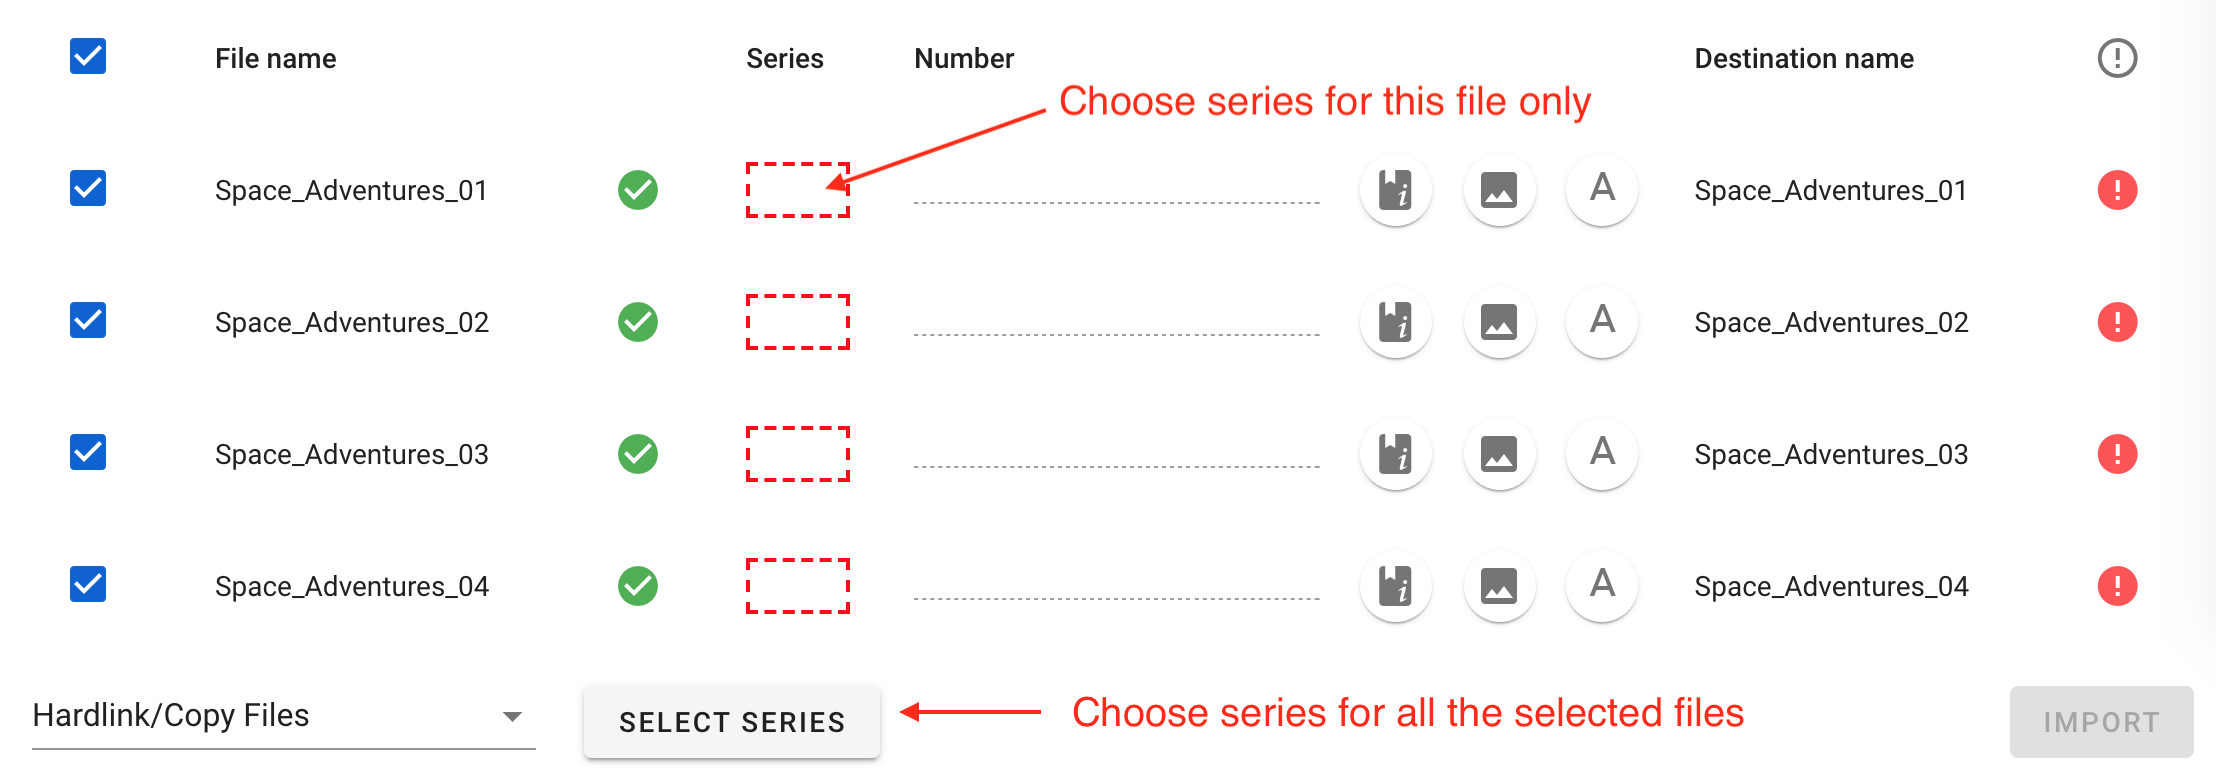 Select series